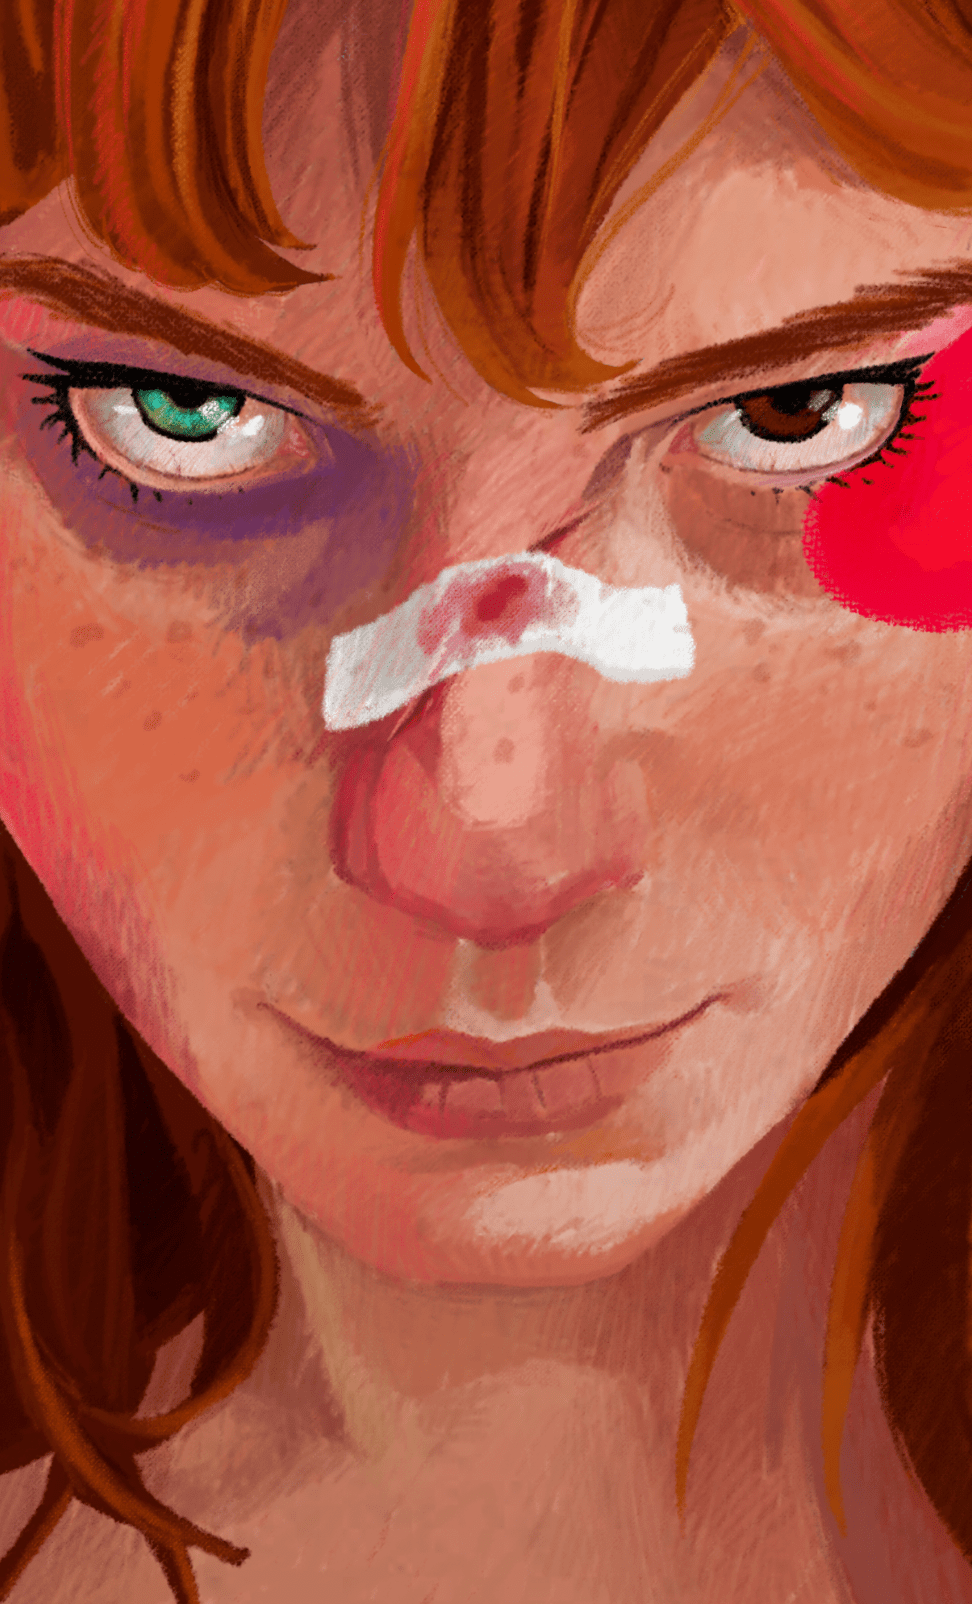 Comic Book Cover Art Digital Art  ILLUSTRATION  portrait red head